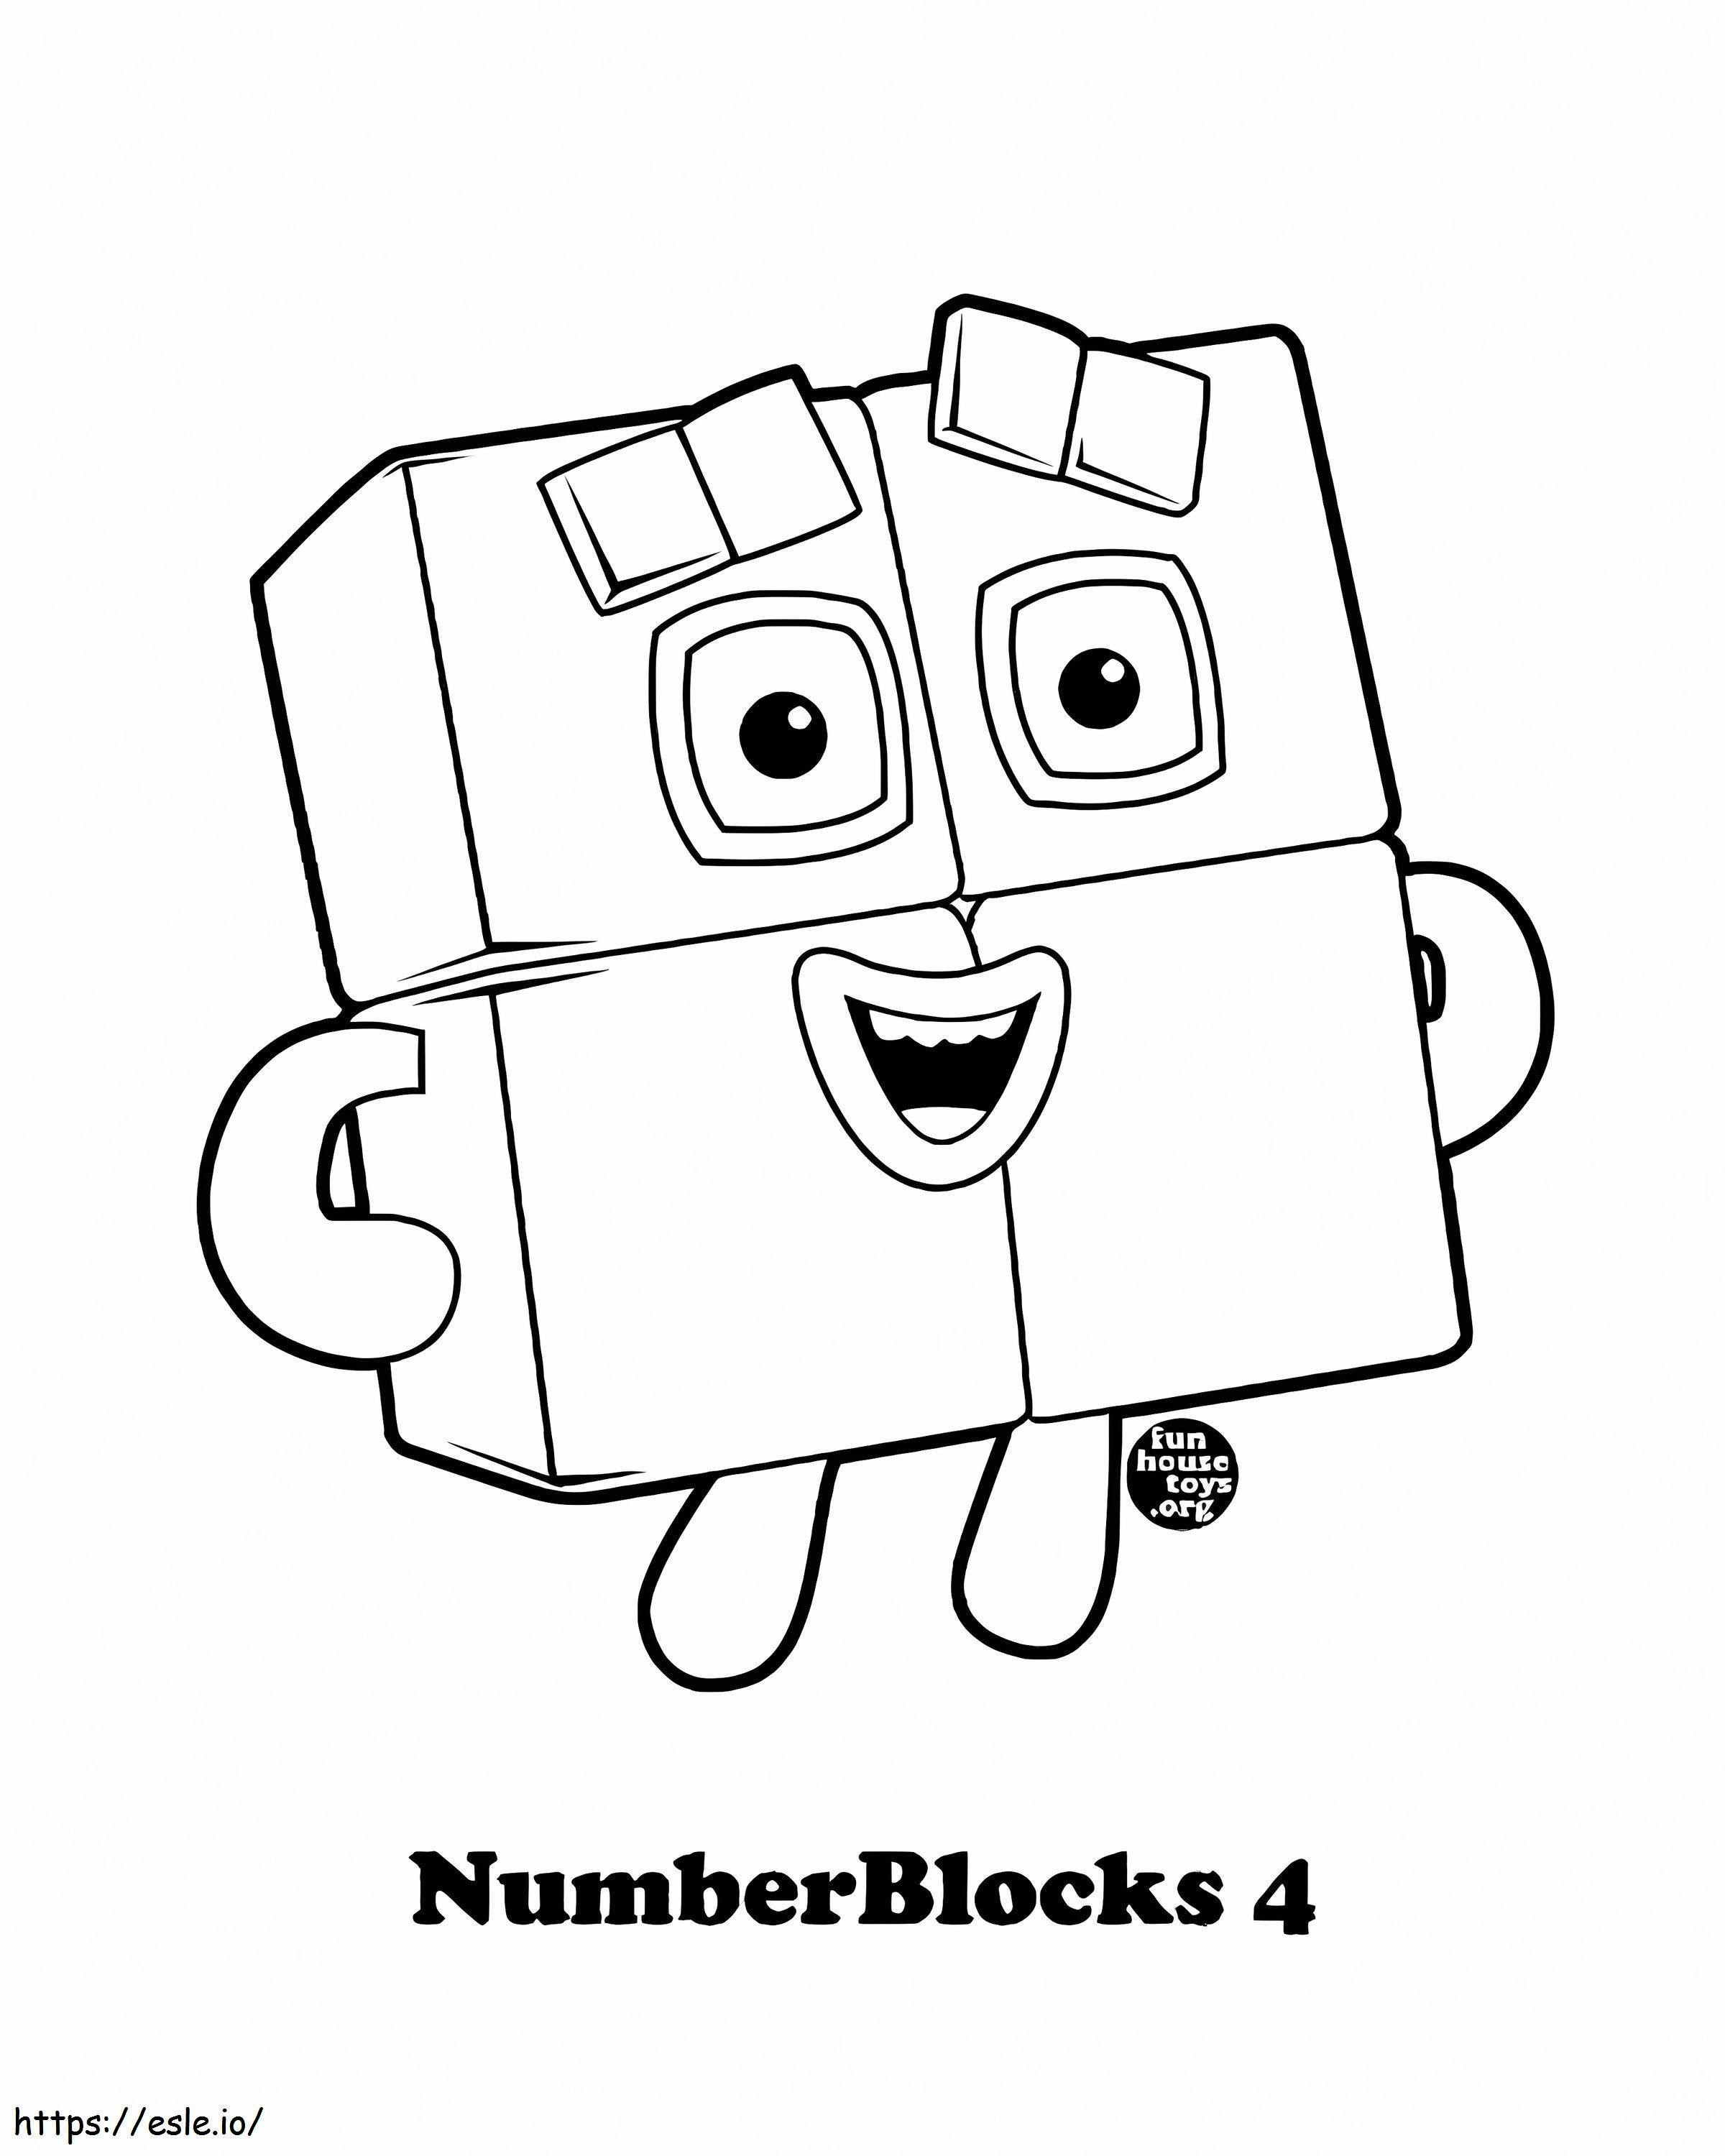 Numberblocks 4 coloring page